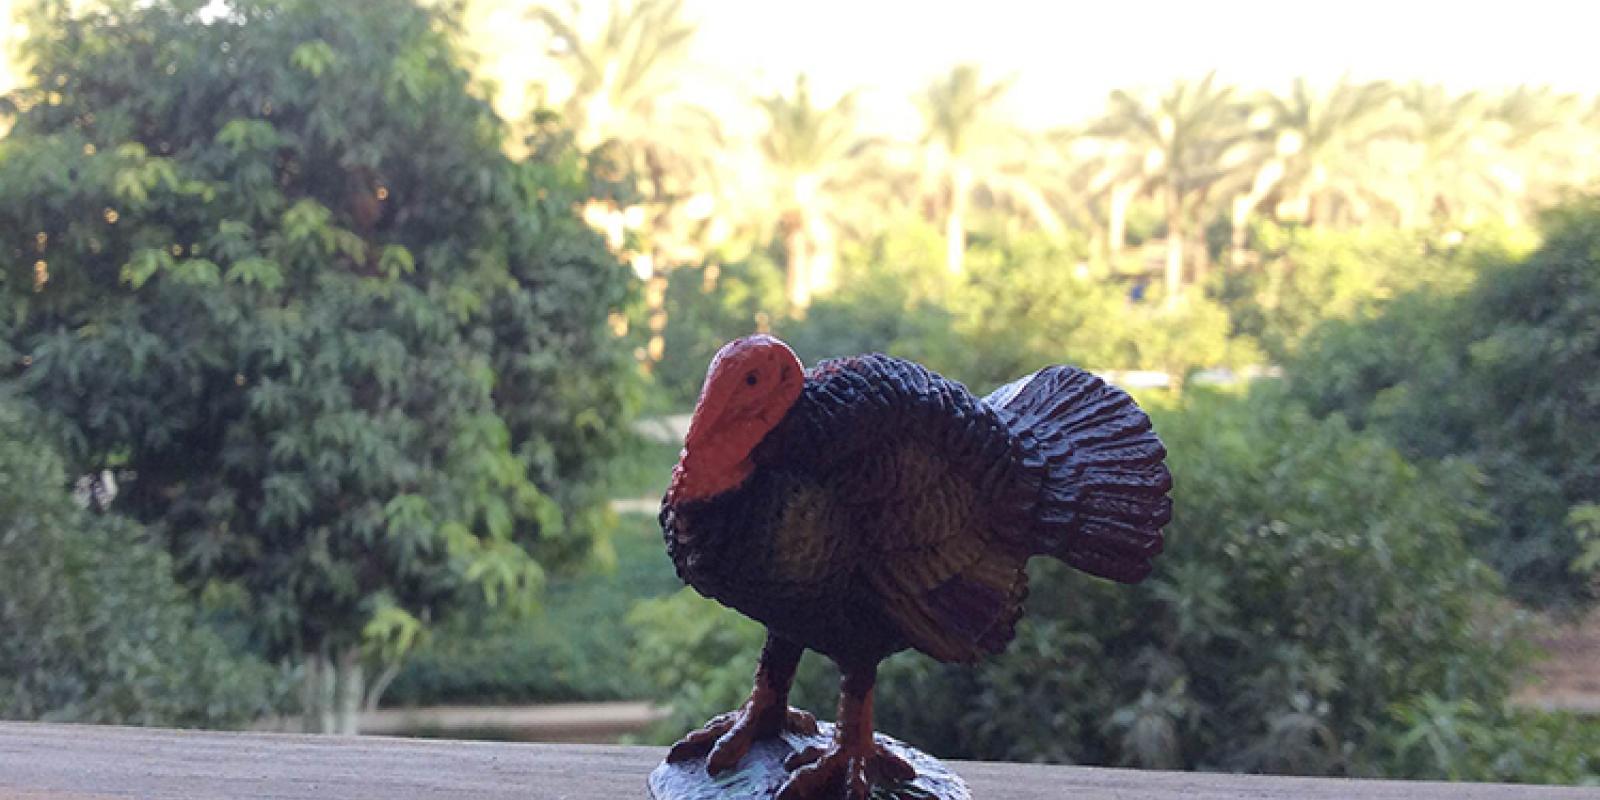 AUC's annual turkey hunt brings the Thanksgiving spirit to campus